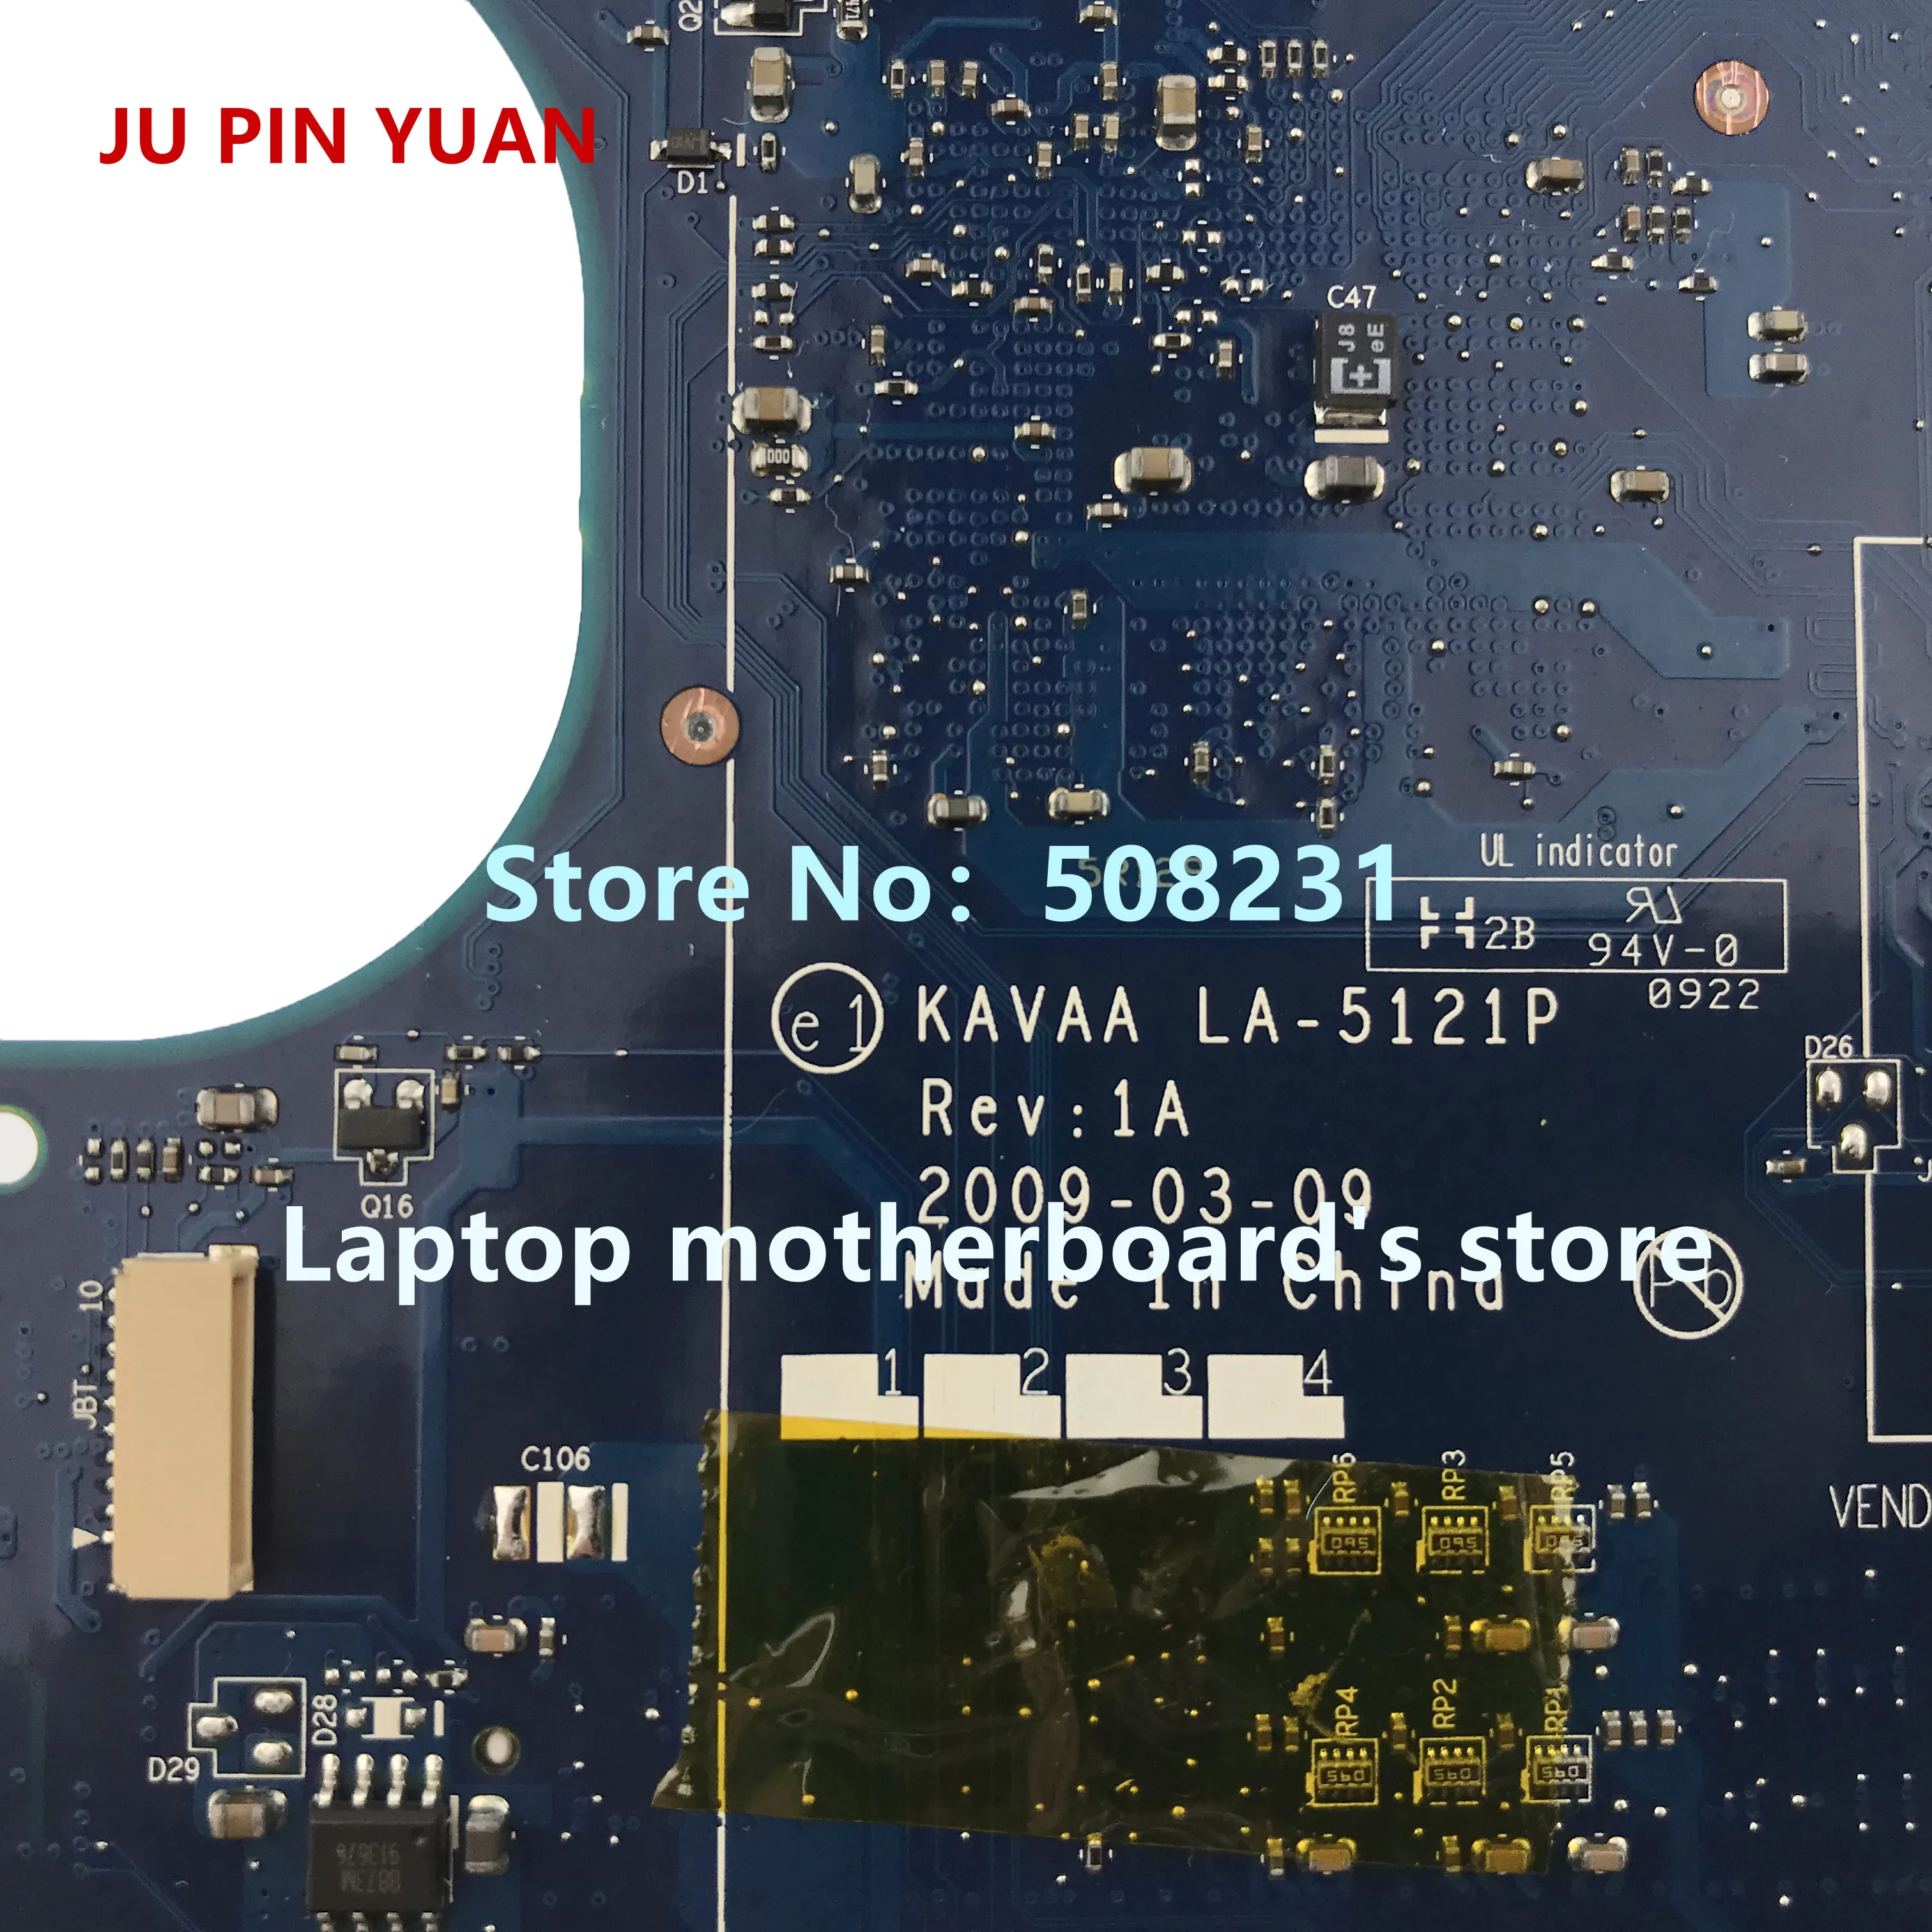 Ju pin yuan для Toshiba Mini NB205 NB200 материнская плата для ноутбука K000078610 KAVAA LA-5121P с N280 все функции полностью протестированы